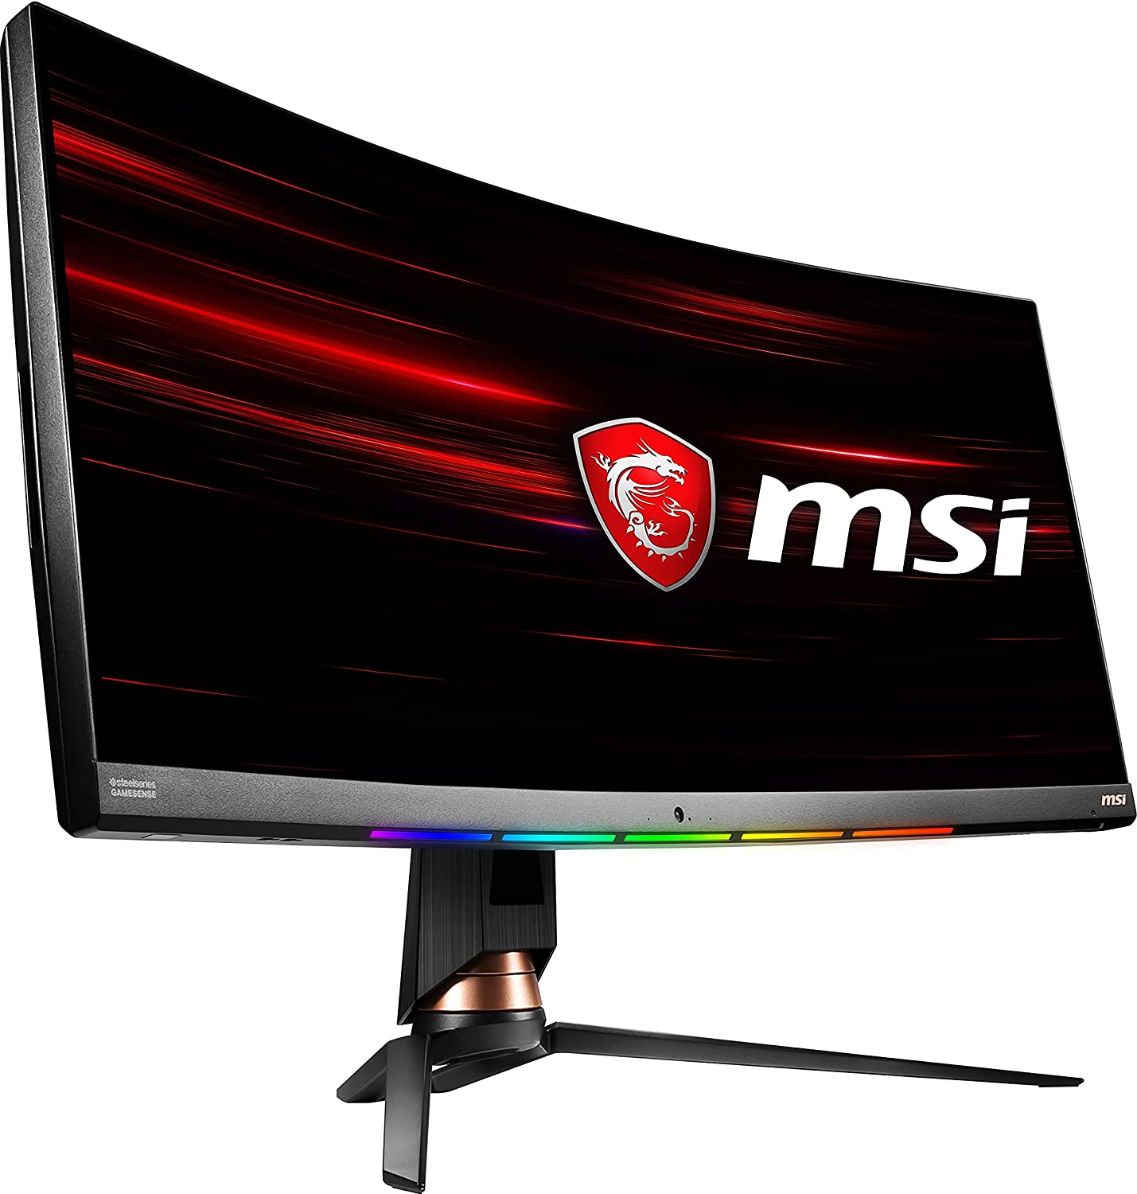 MSI Uwqhd - Best Monitor for Sim Racing